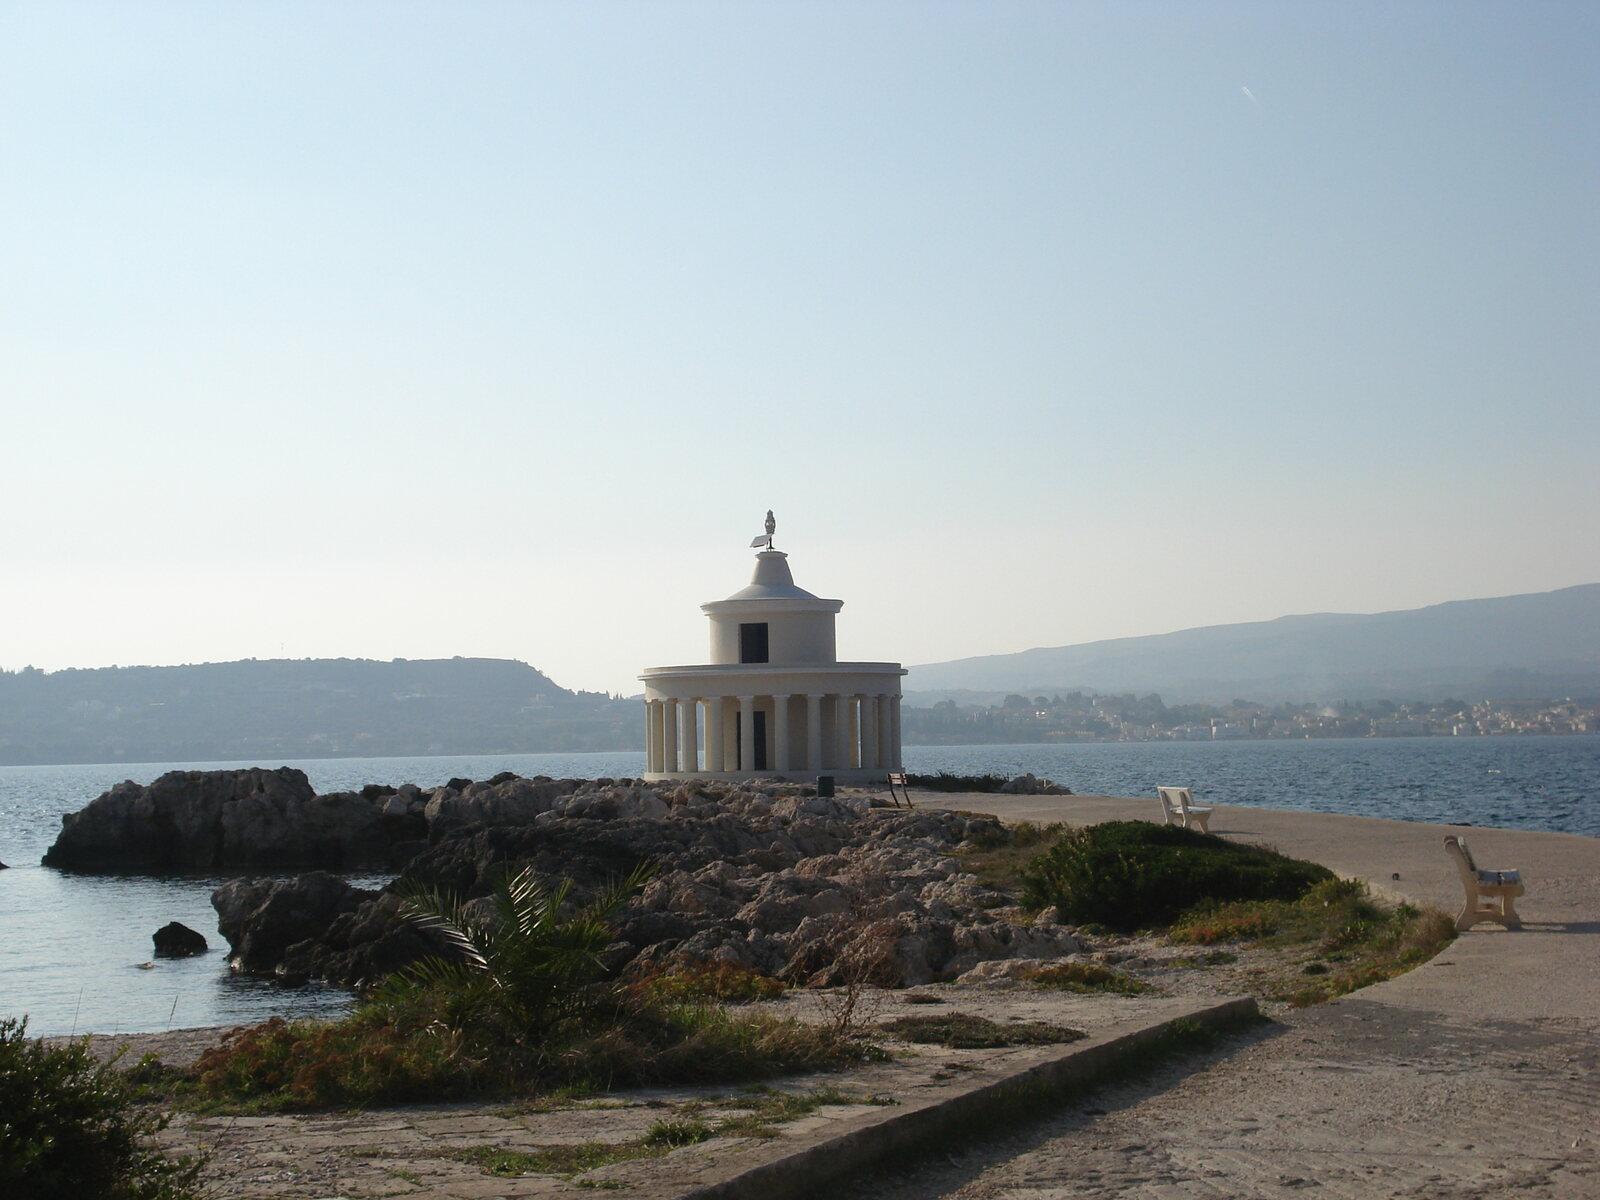 St. Theodoron Lighthouse